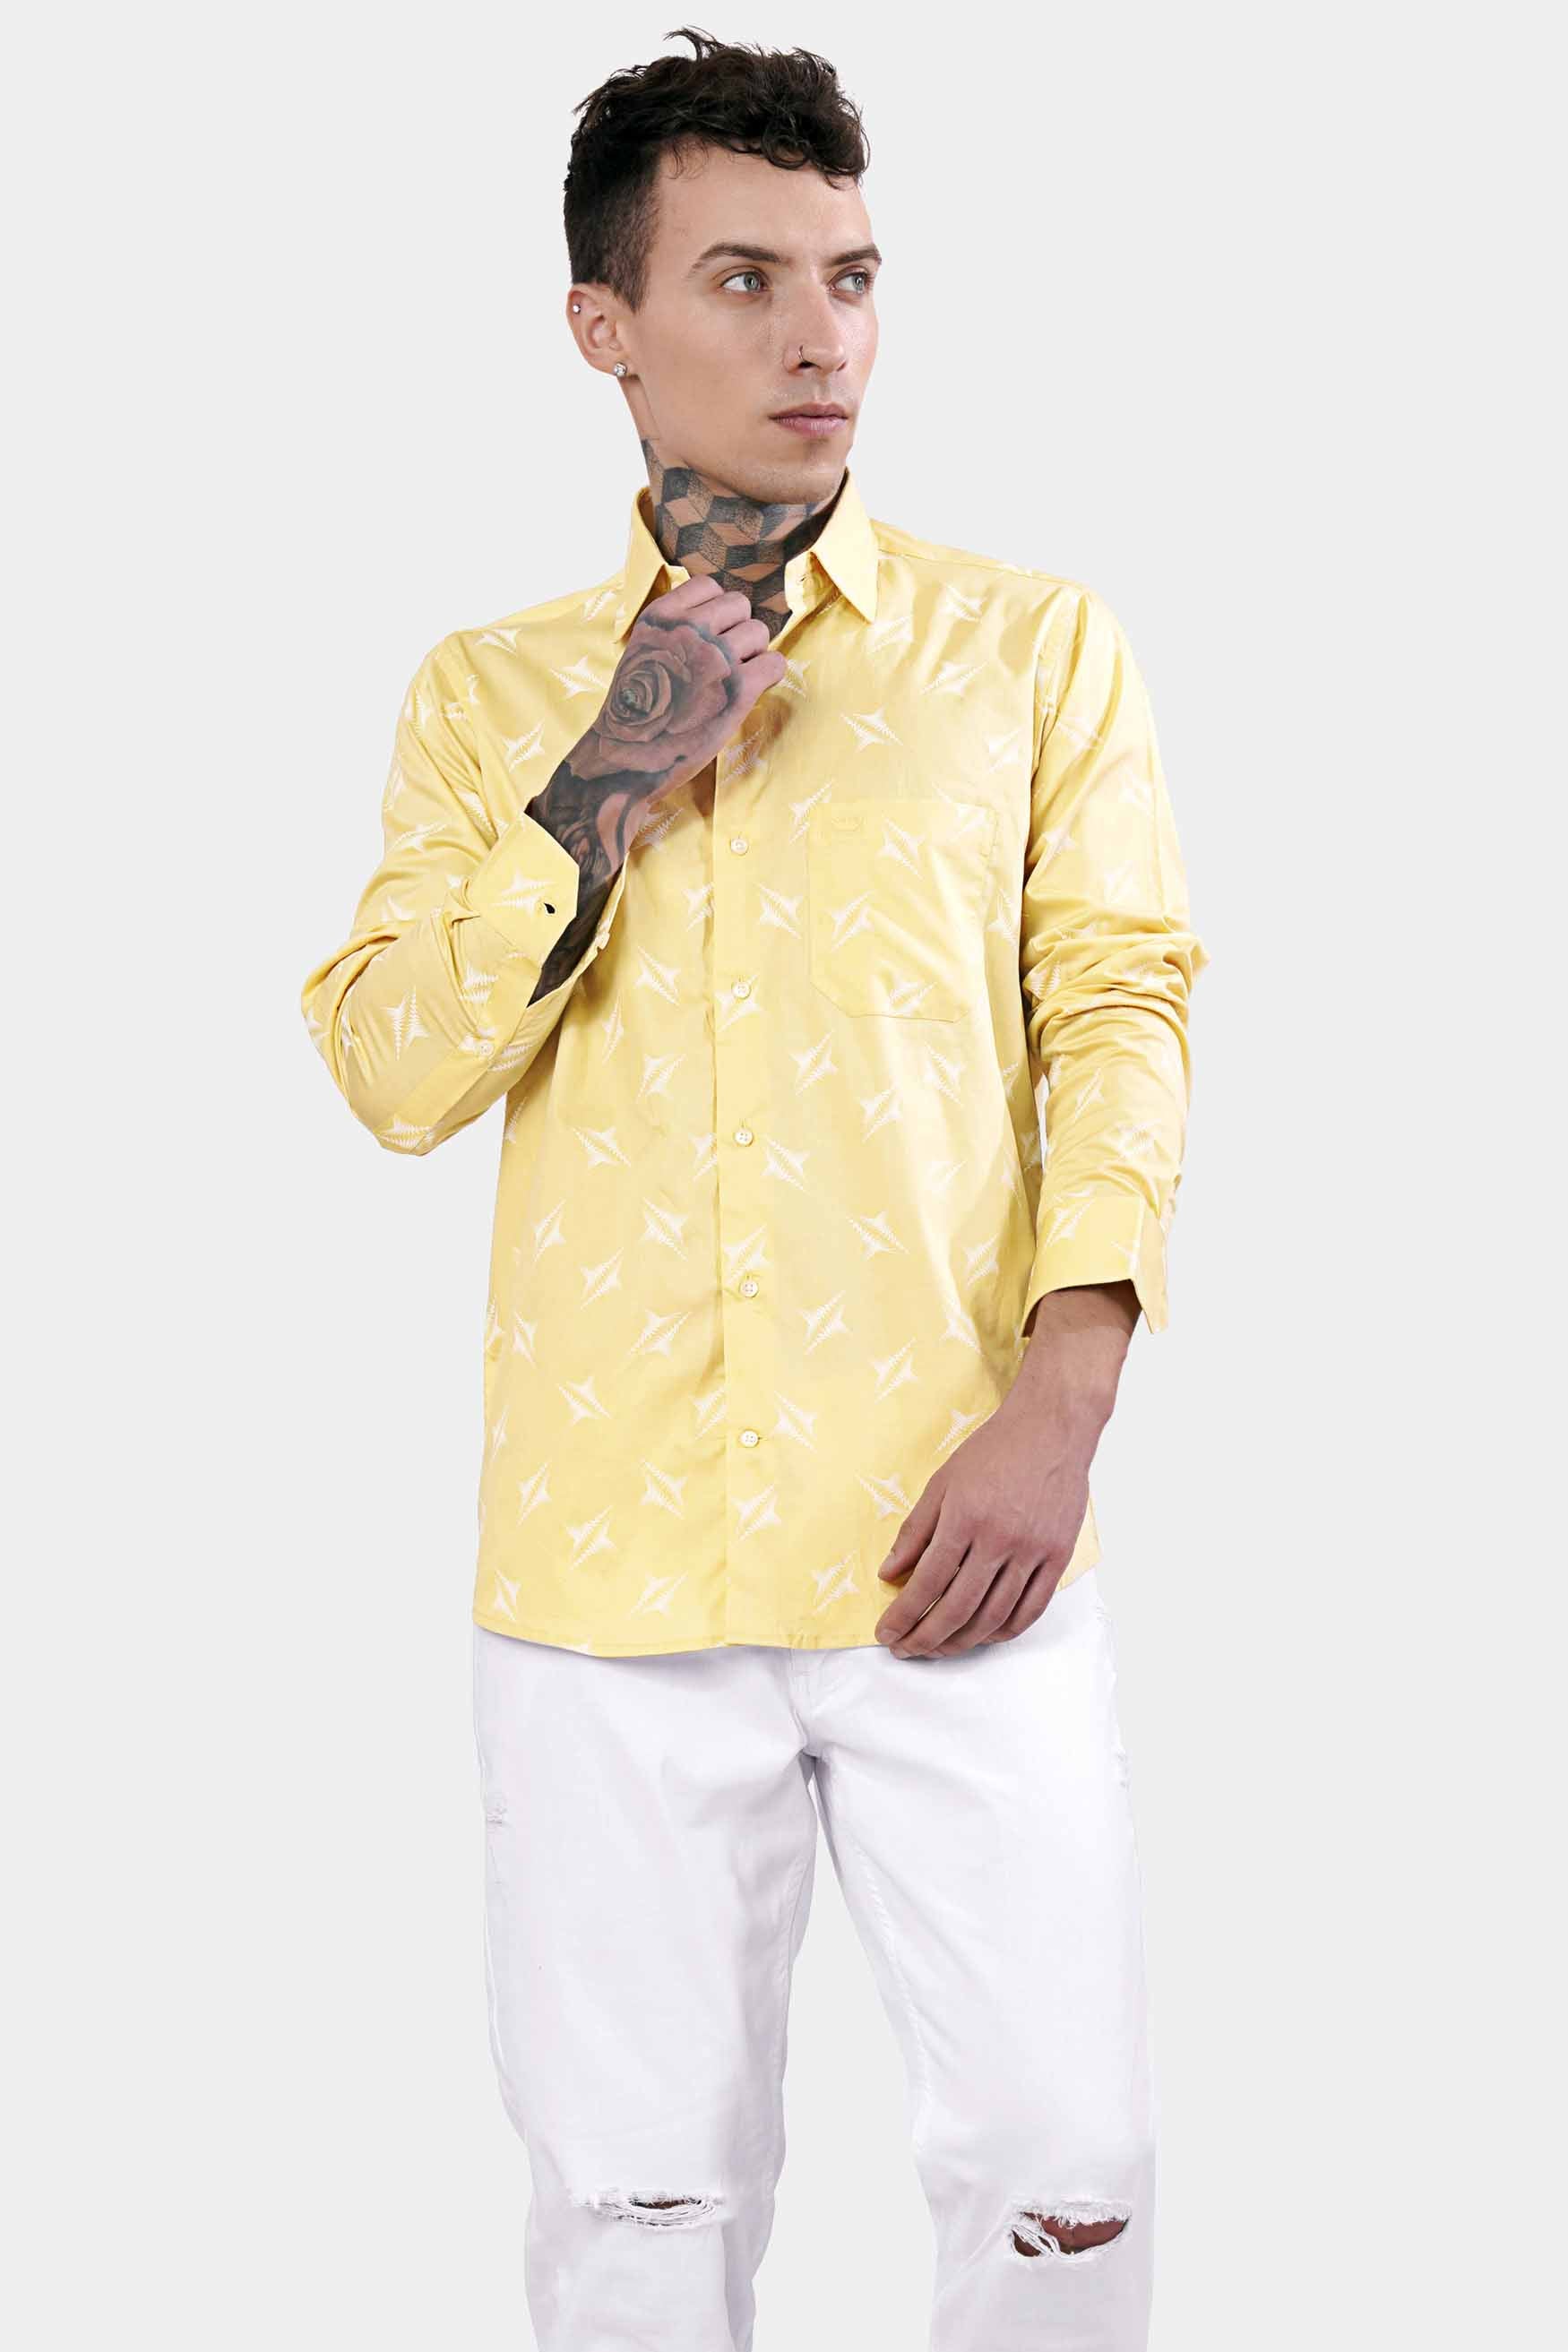 Sandwisp Yellow and White Printed Subtle Sheen Super Soft Premium Cotton Shirt